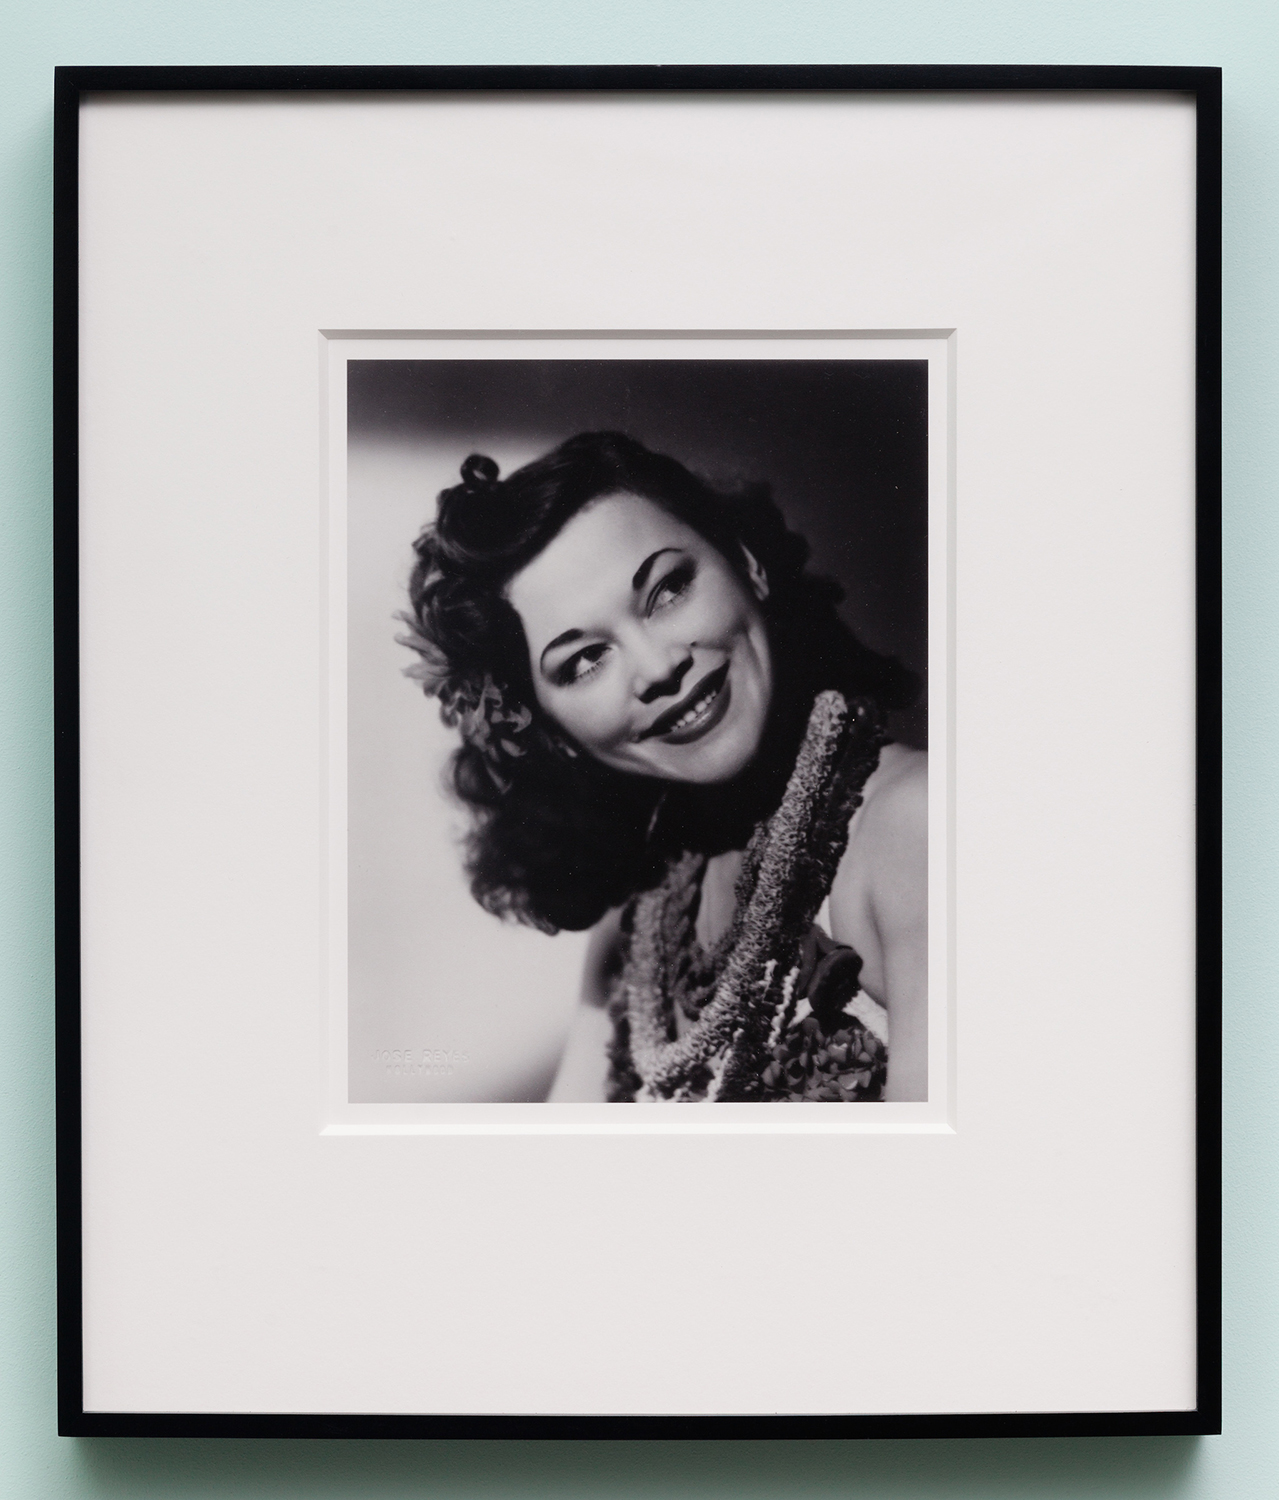  Miljohn Ruperto   Studio Portrait by Jose Reyes,&nbsp;Hollywood,&nbsp;CA 1940 (close up,&nbsp;Polynesian,&nbsp;tilt)   2010  Photograph  10 x 8 inches    